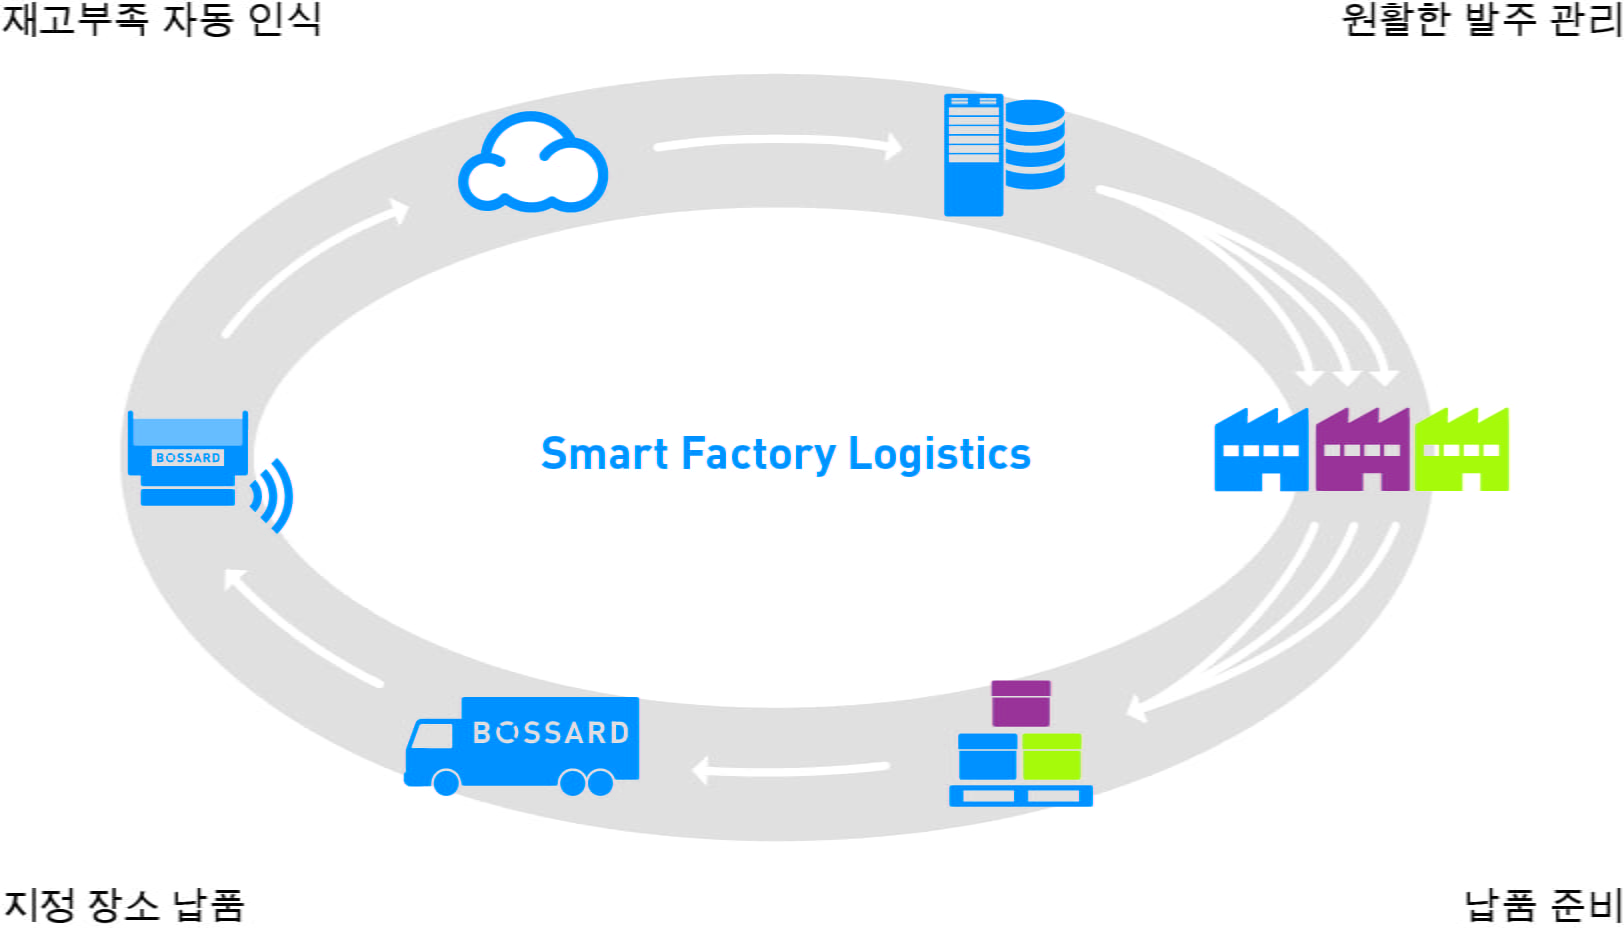 process of Smart Factory Logistics